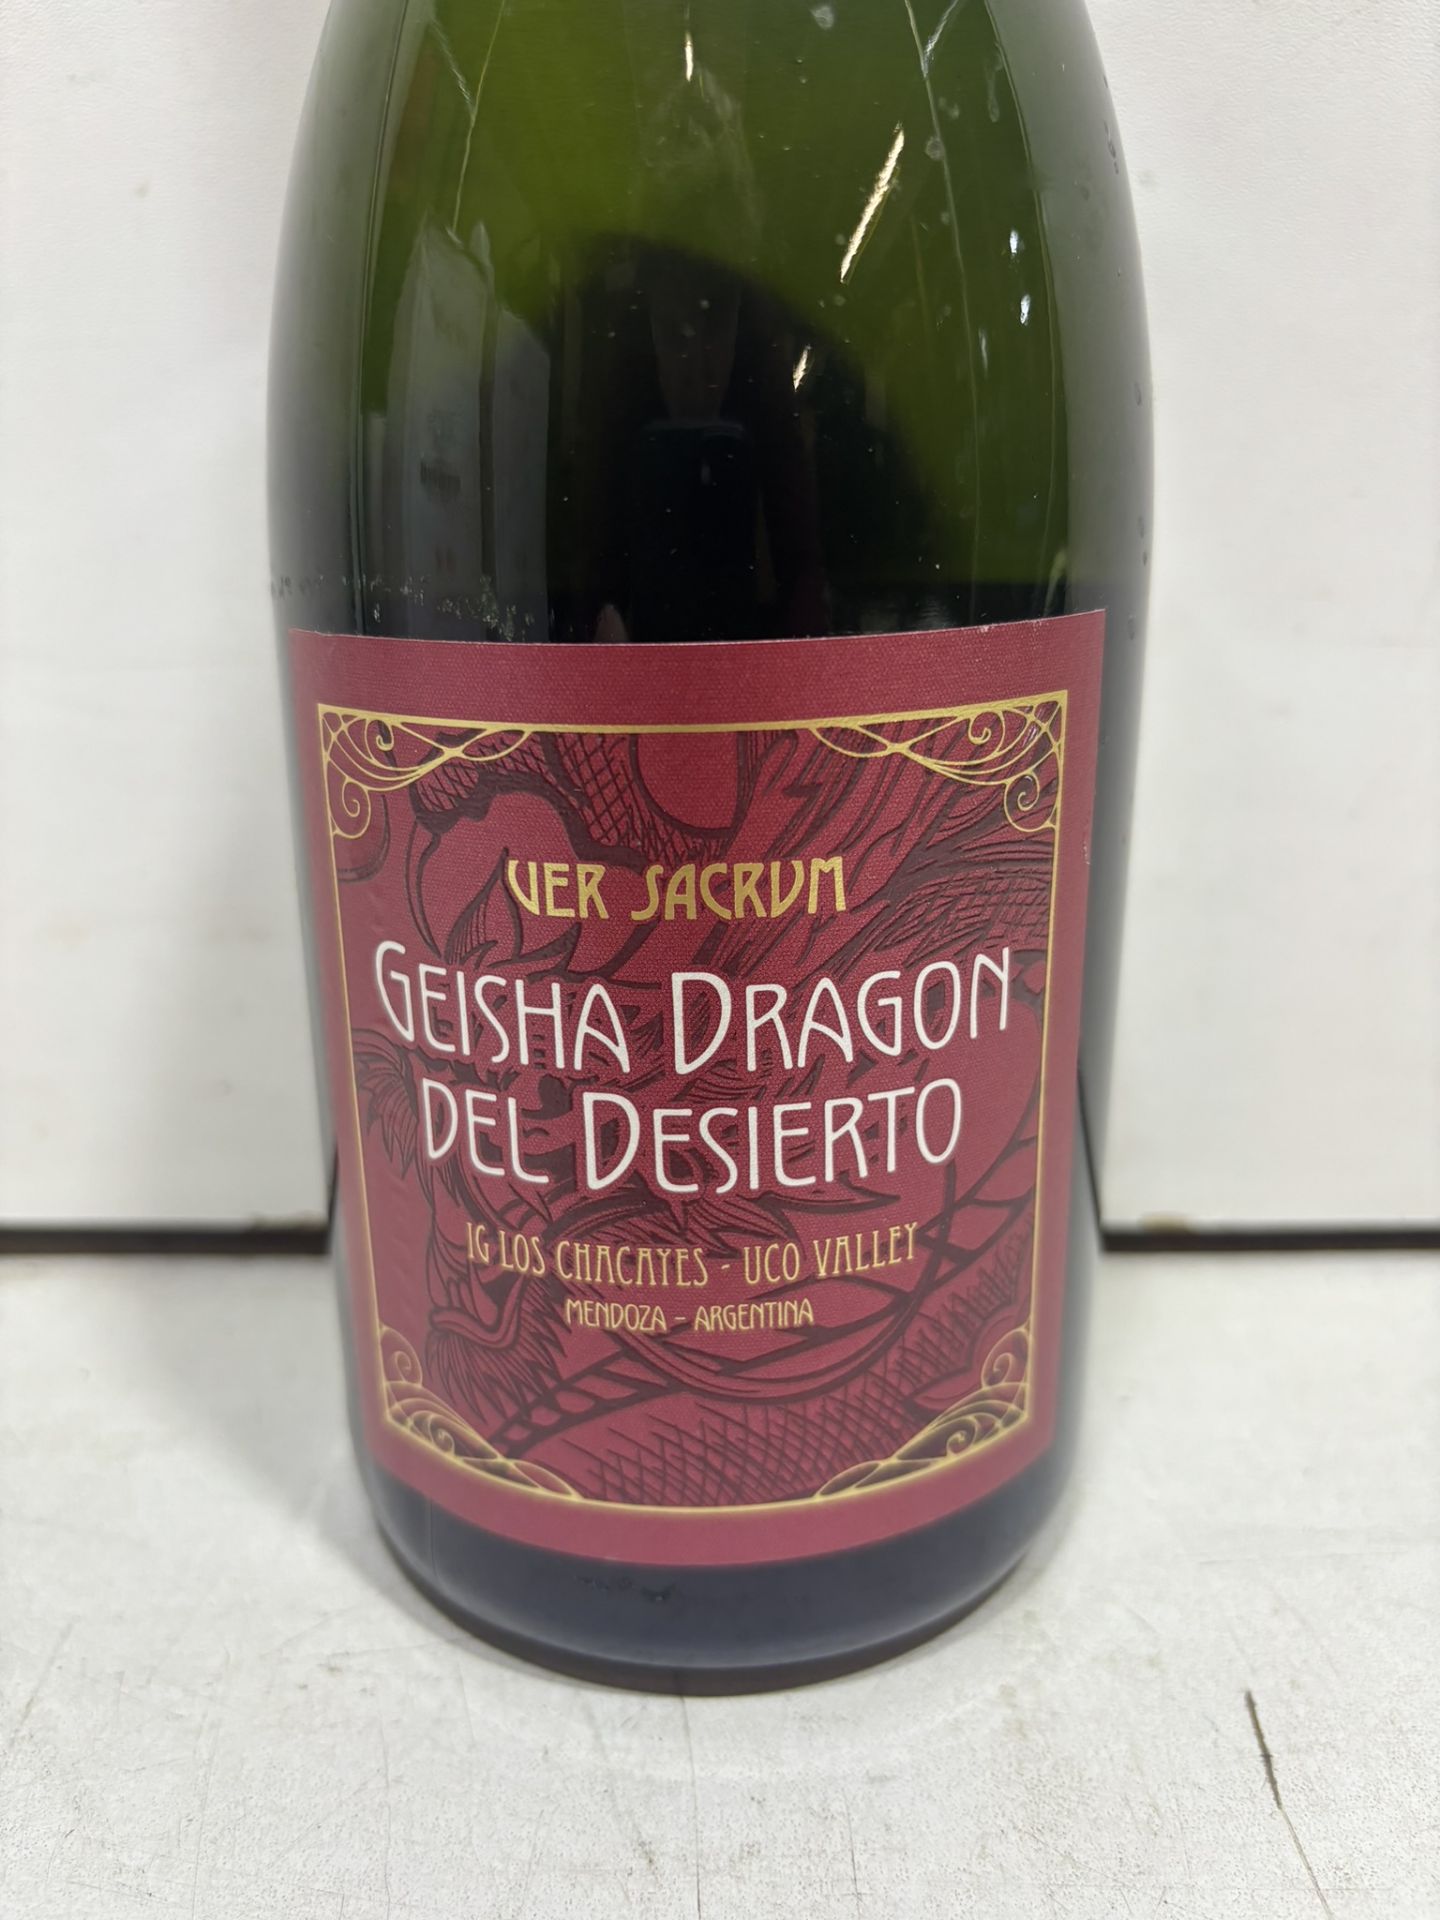 11 X Bottles Of Ver Sacrum Geisha Dragon Del Desierto 2021, White Wine - Image 2 of 6